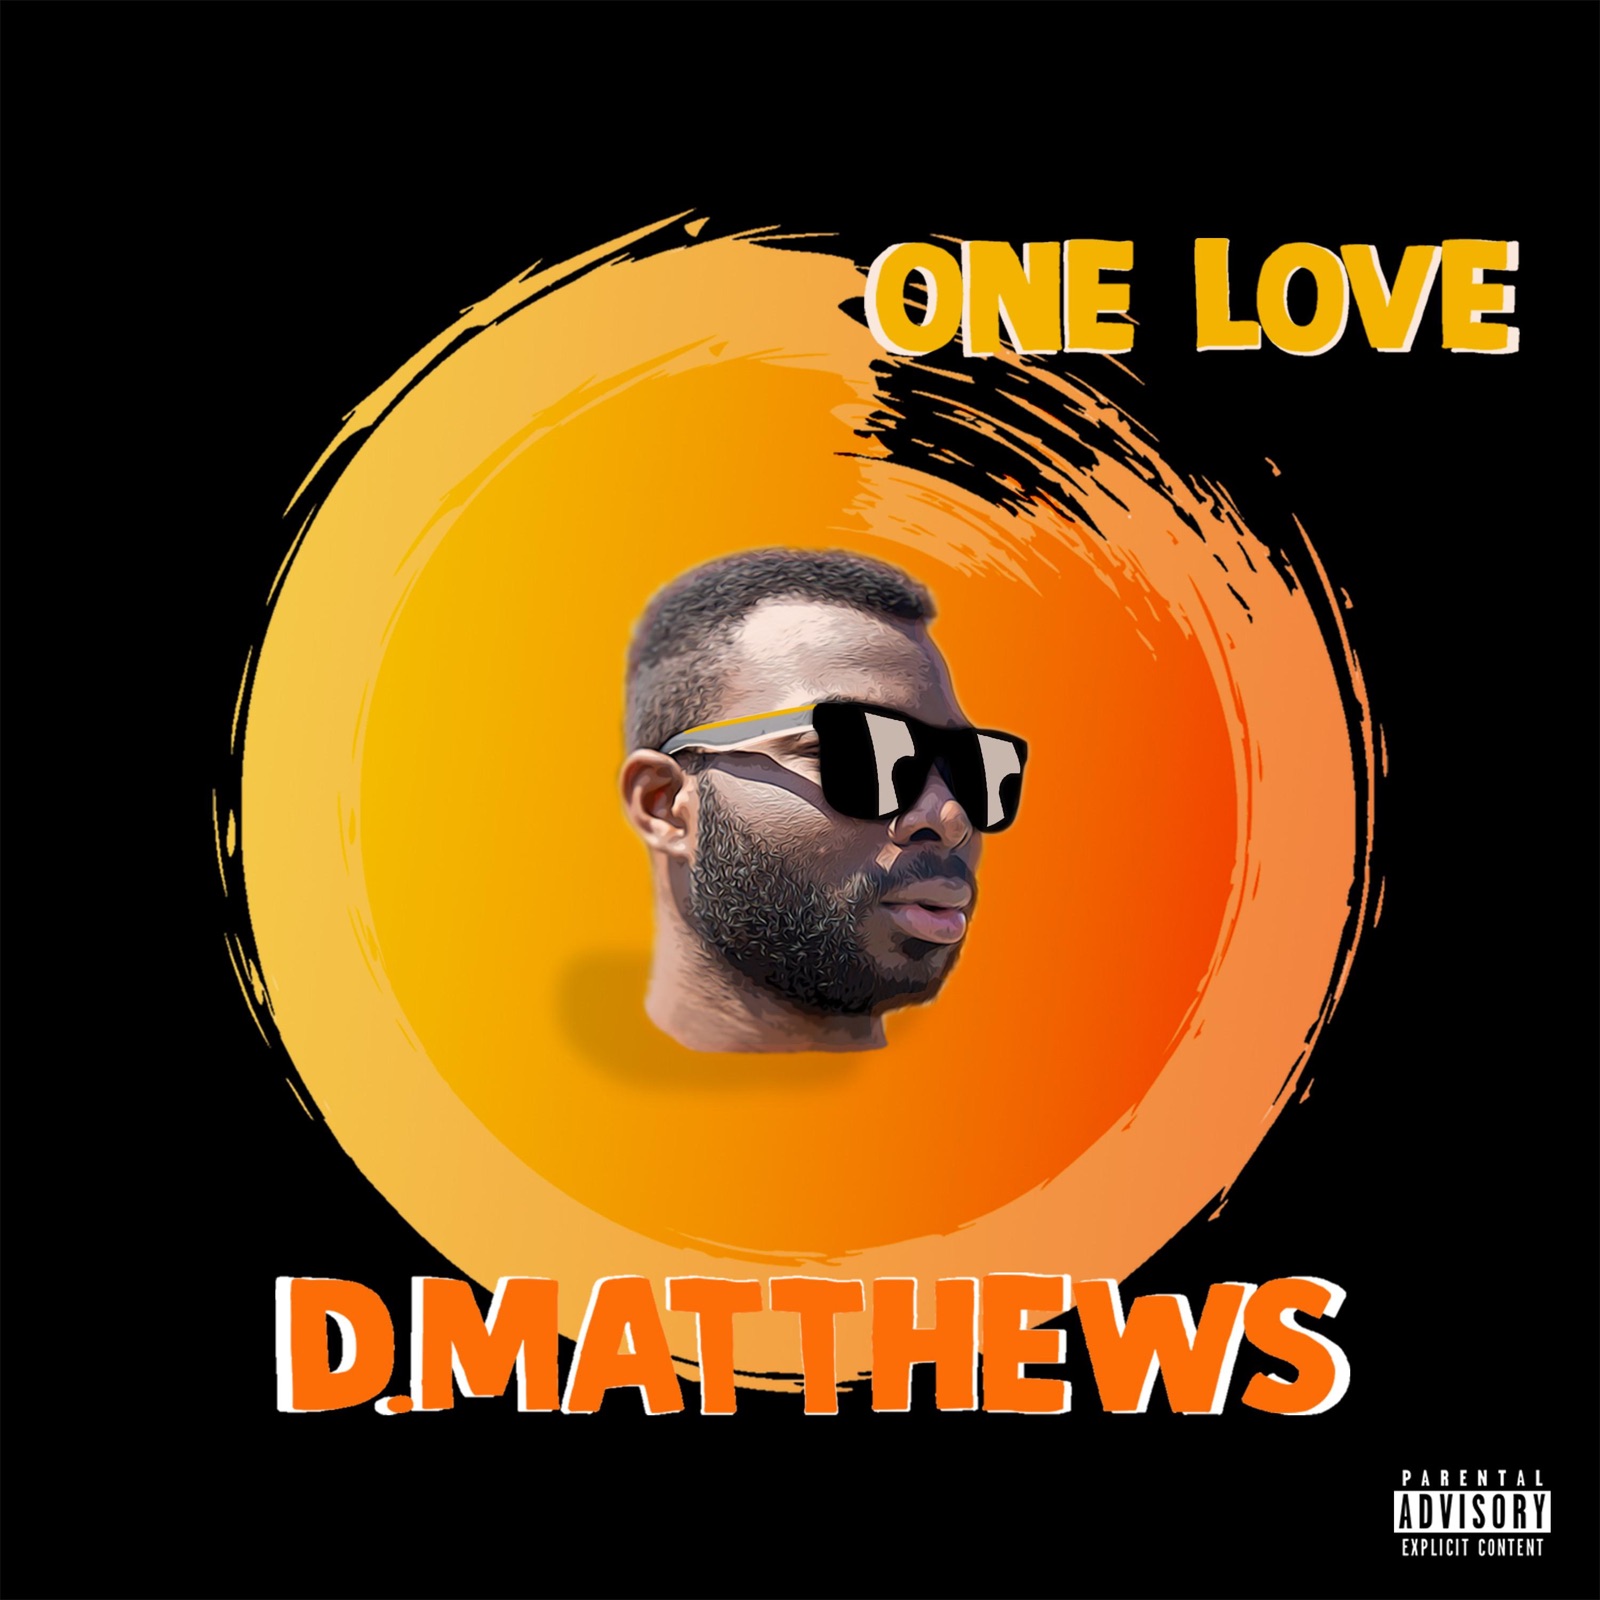 One Love - Single Release